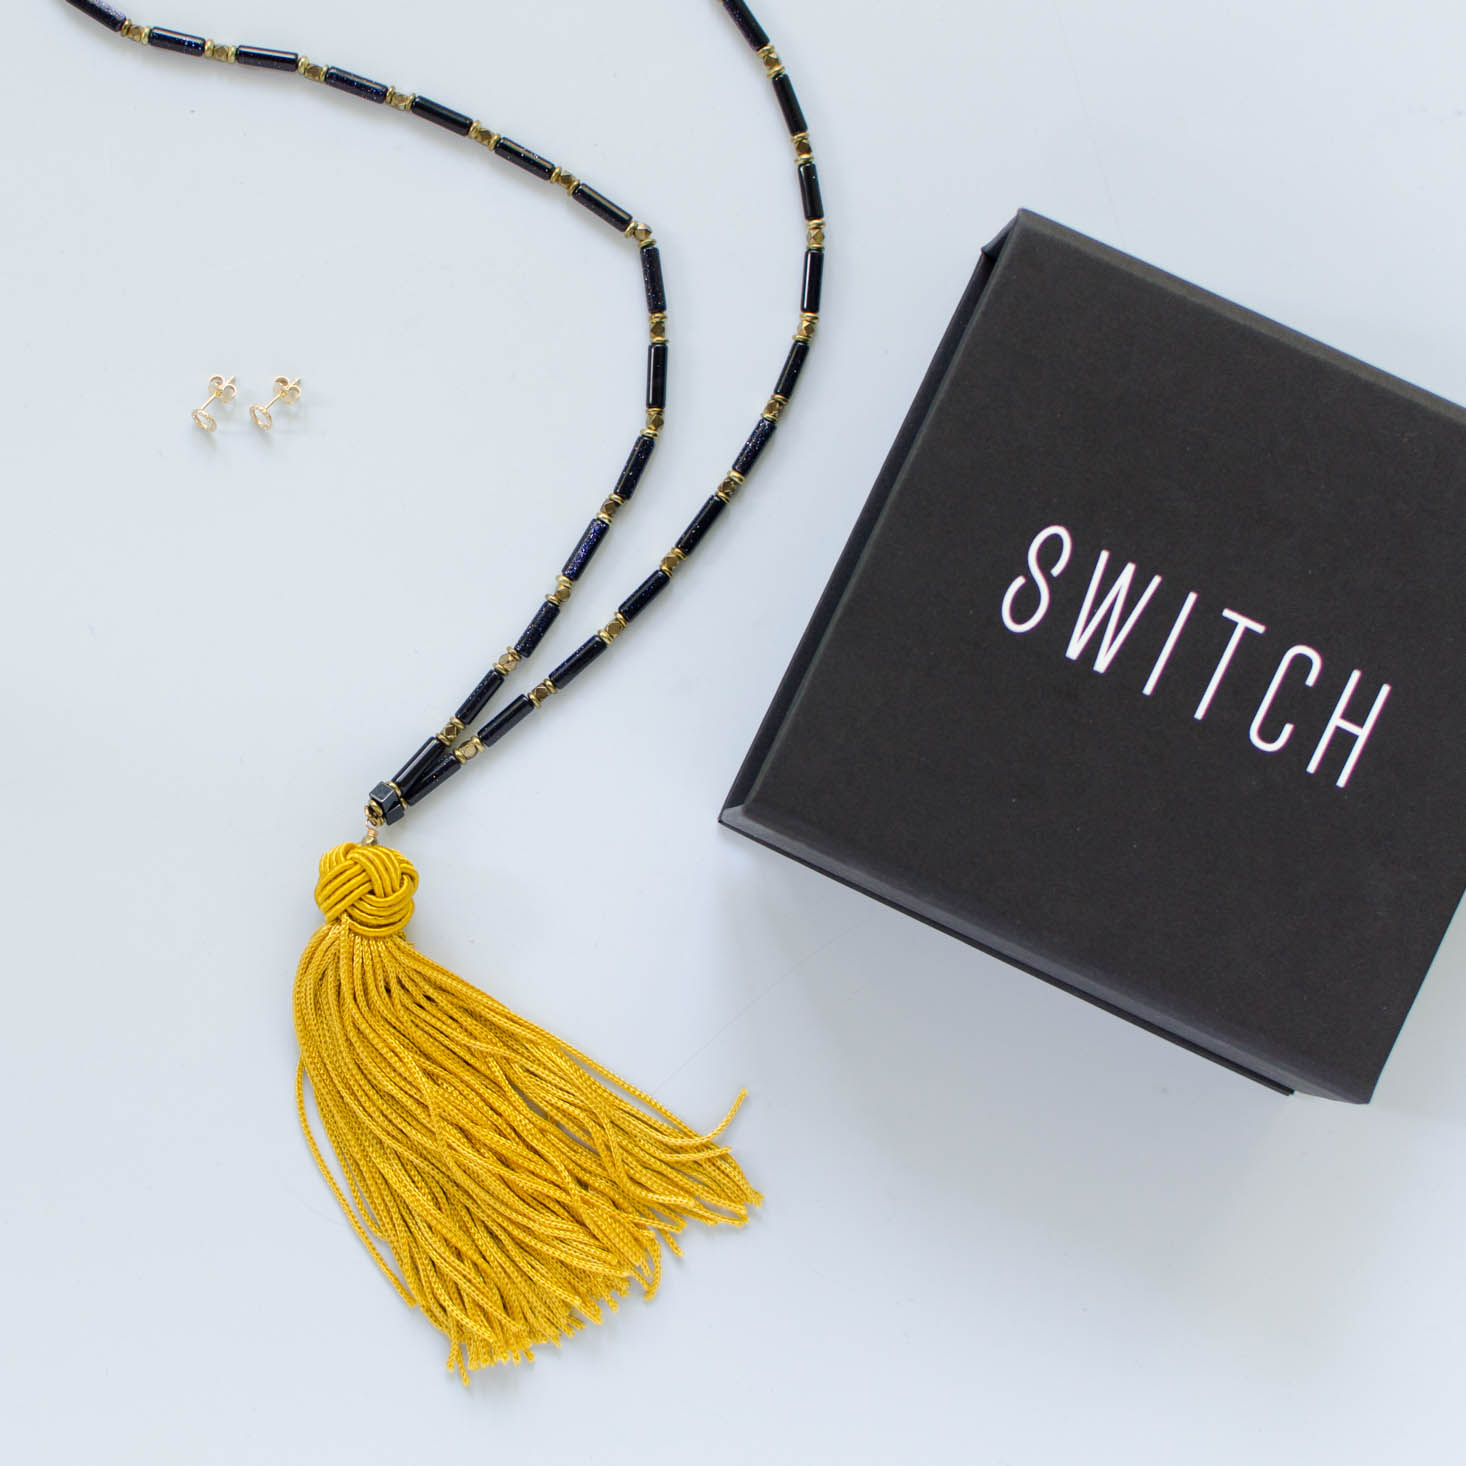 Switch Designer Jewelry 3